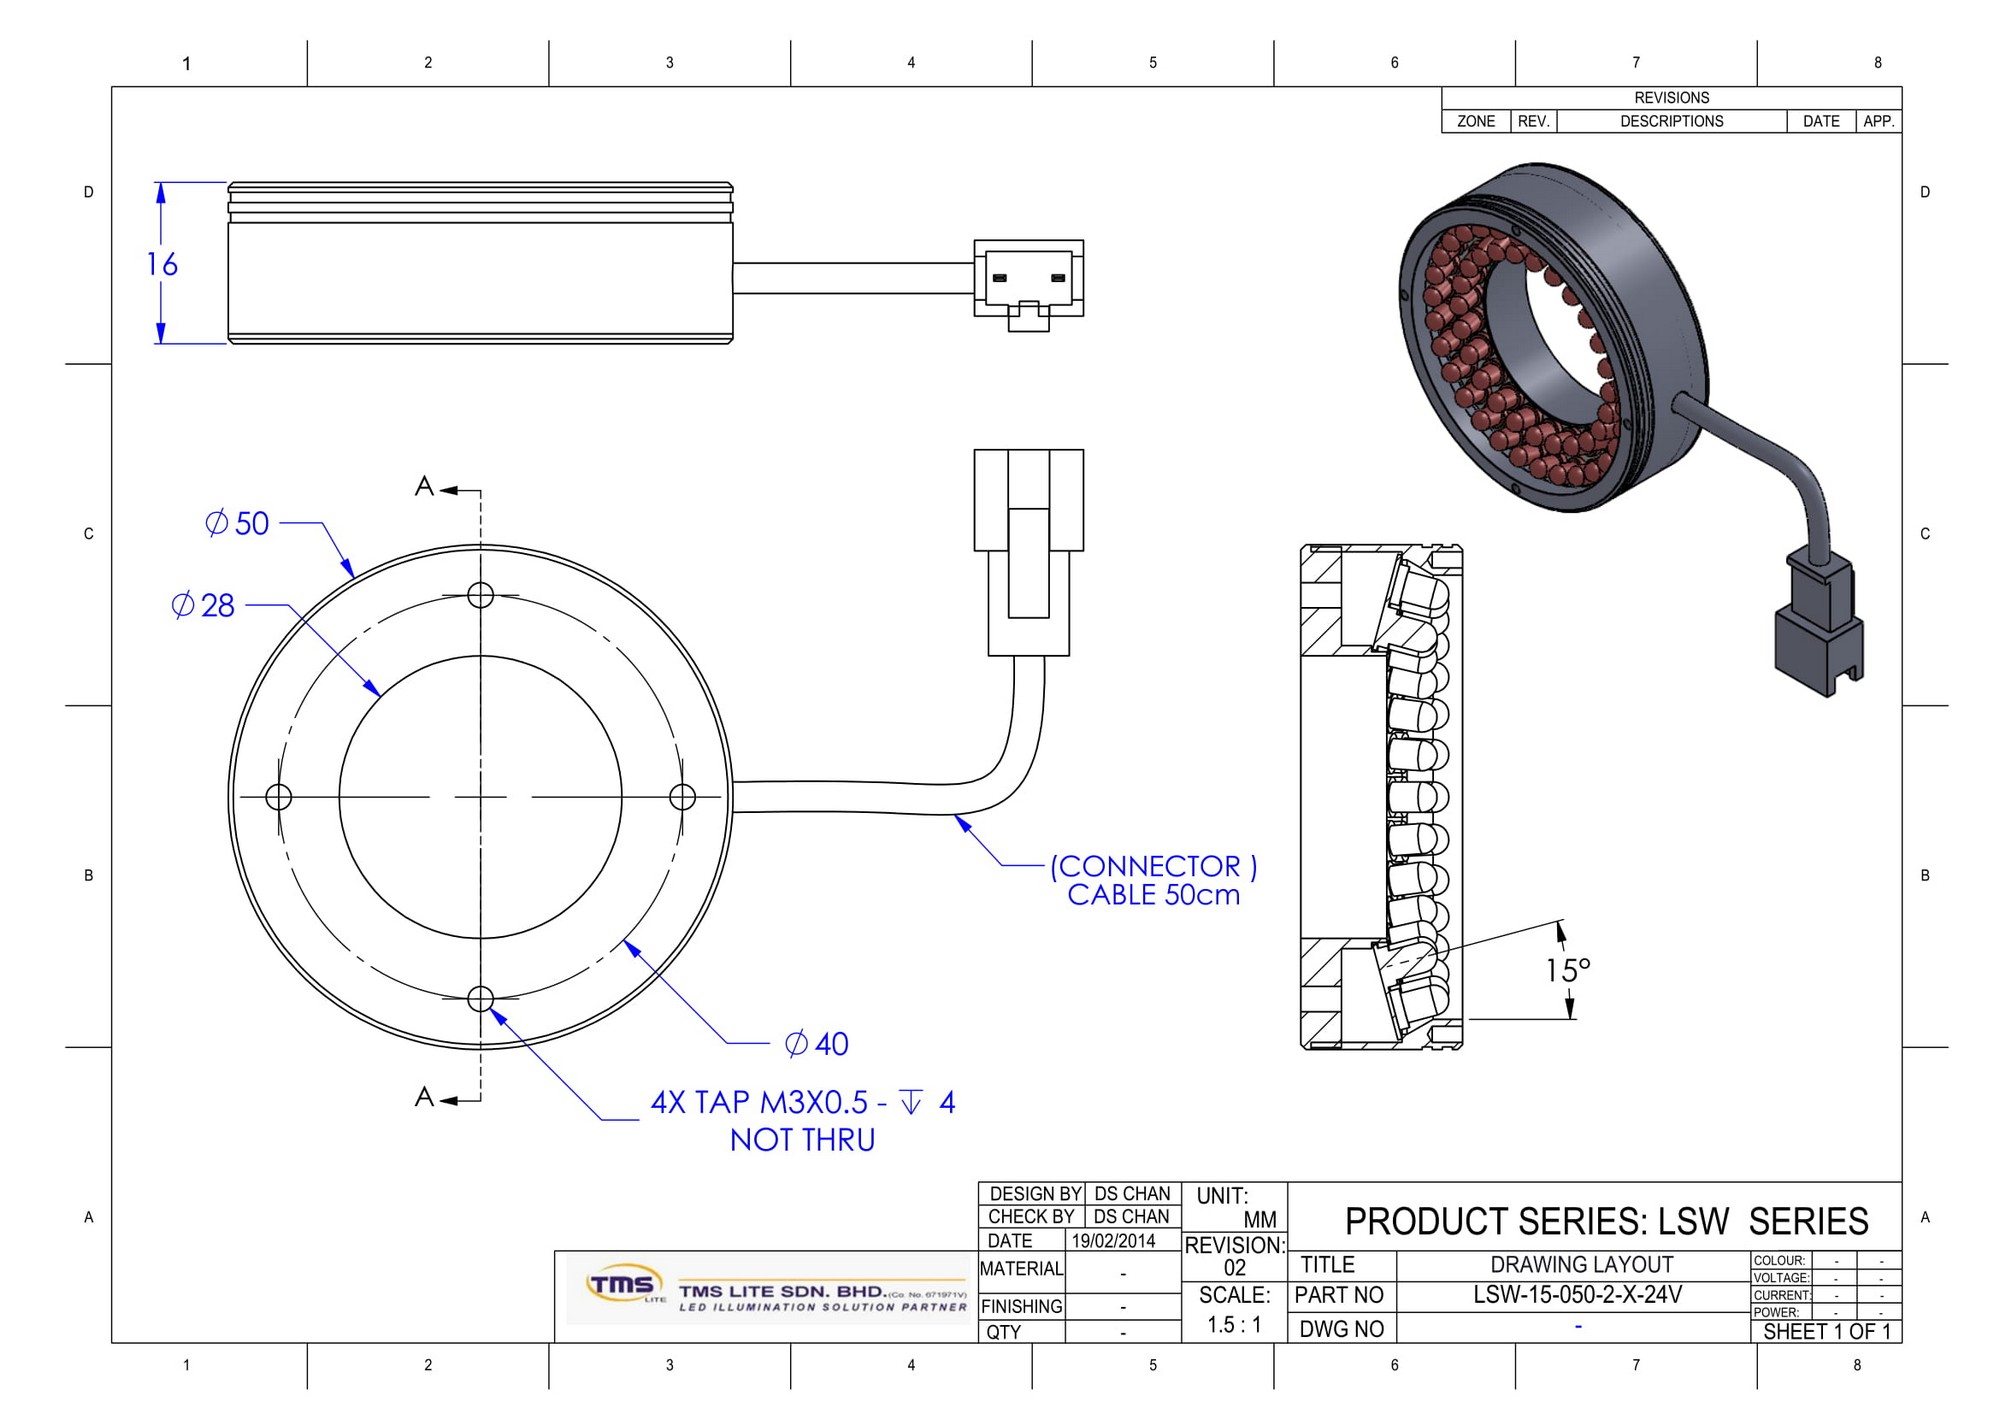 tekening schematische opbouw LSW-15-050-2-R-24V